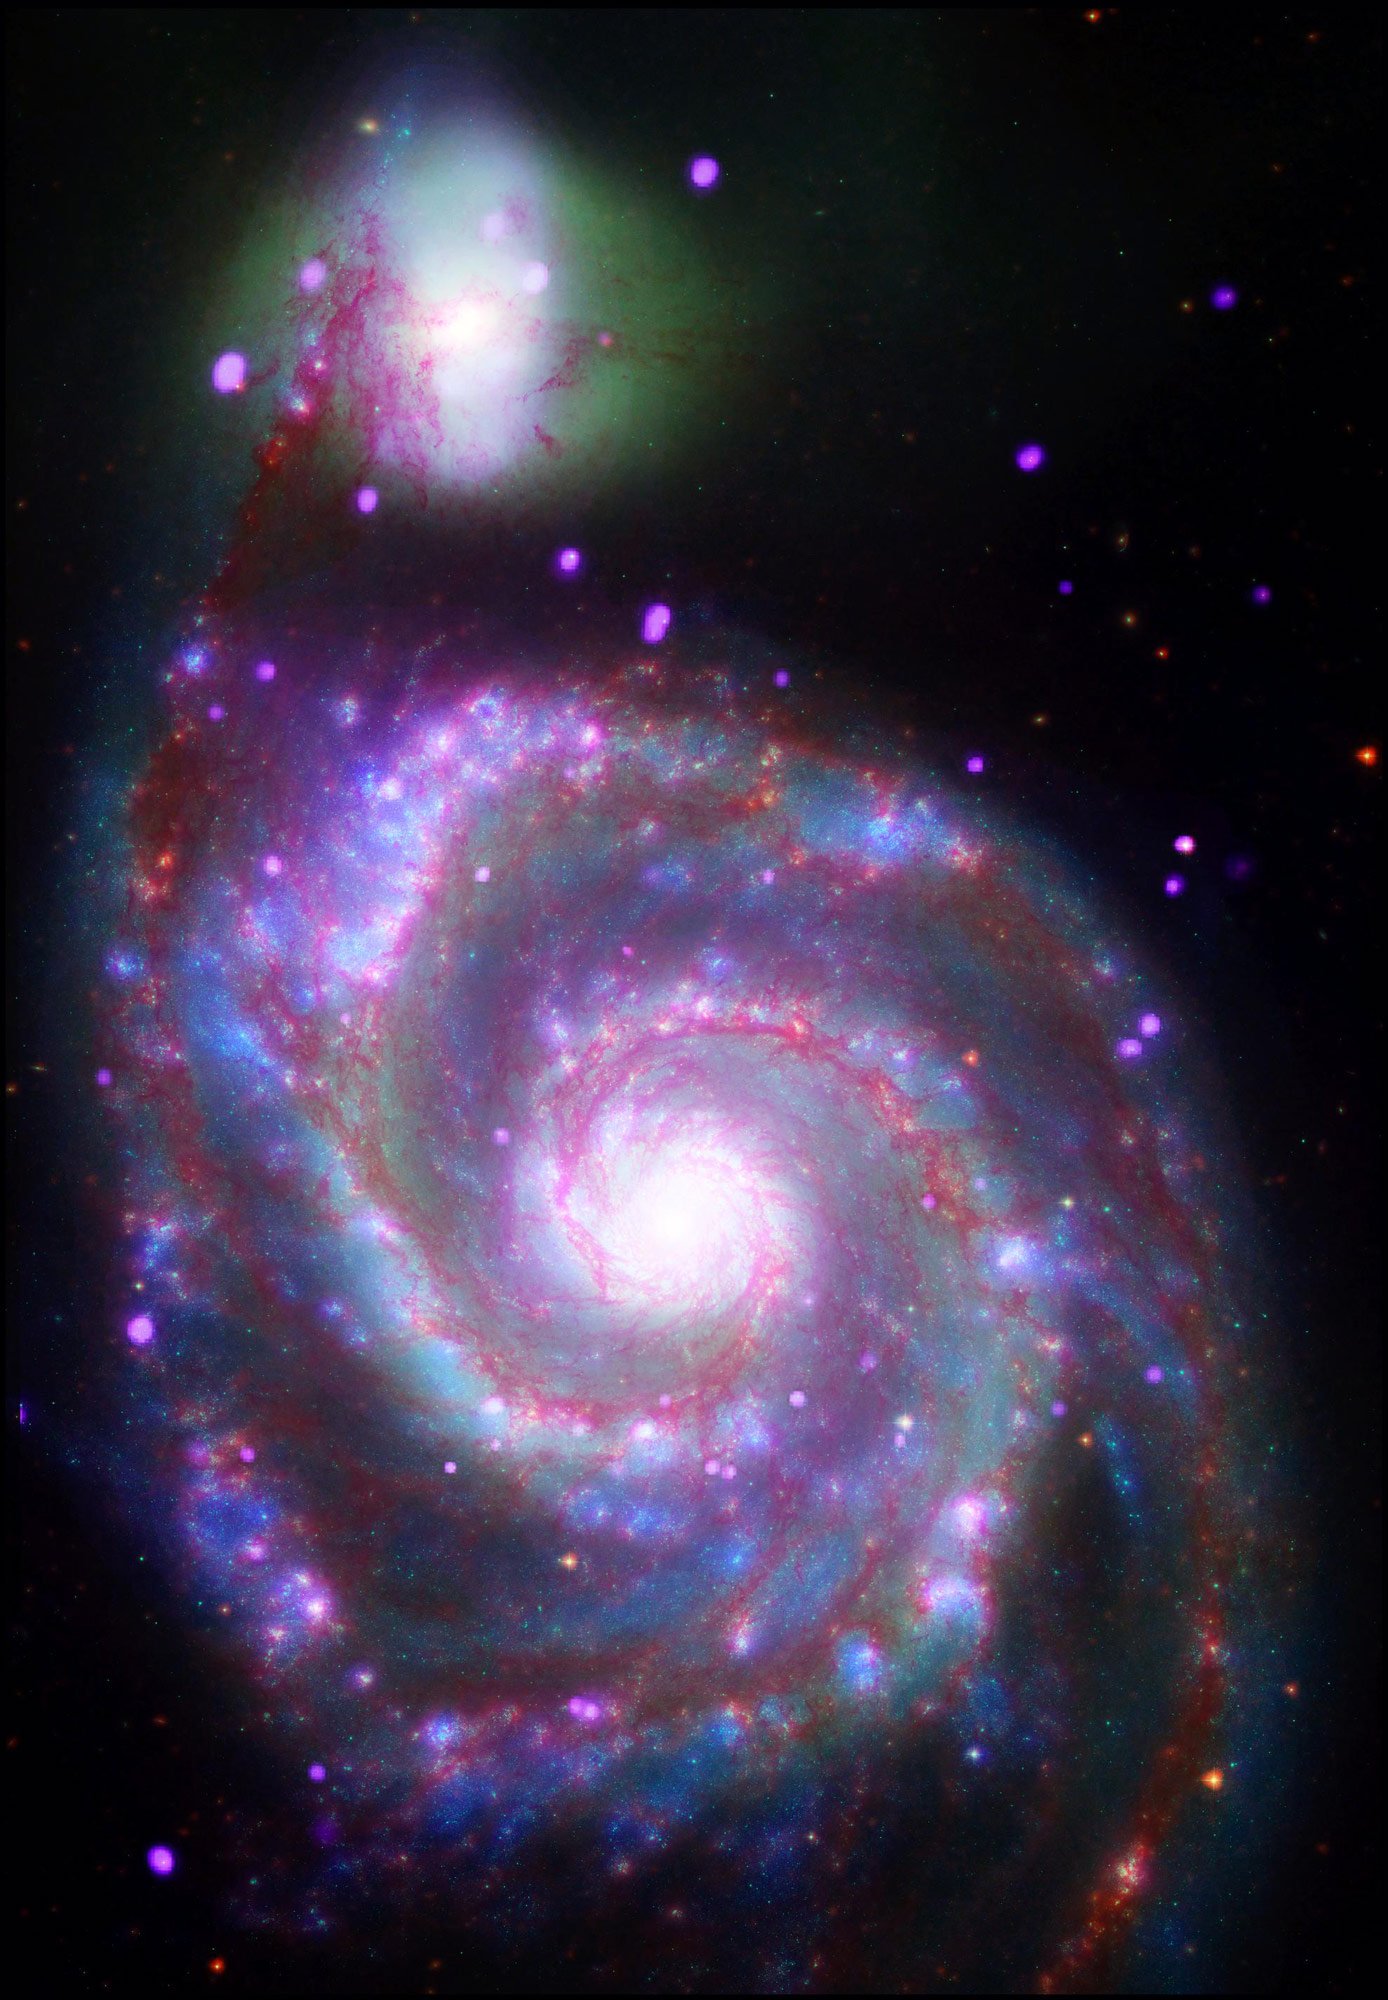 The Whirlpool Galaxy, Spiral Galaxy M51